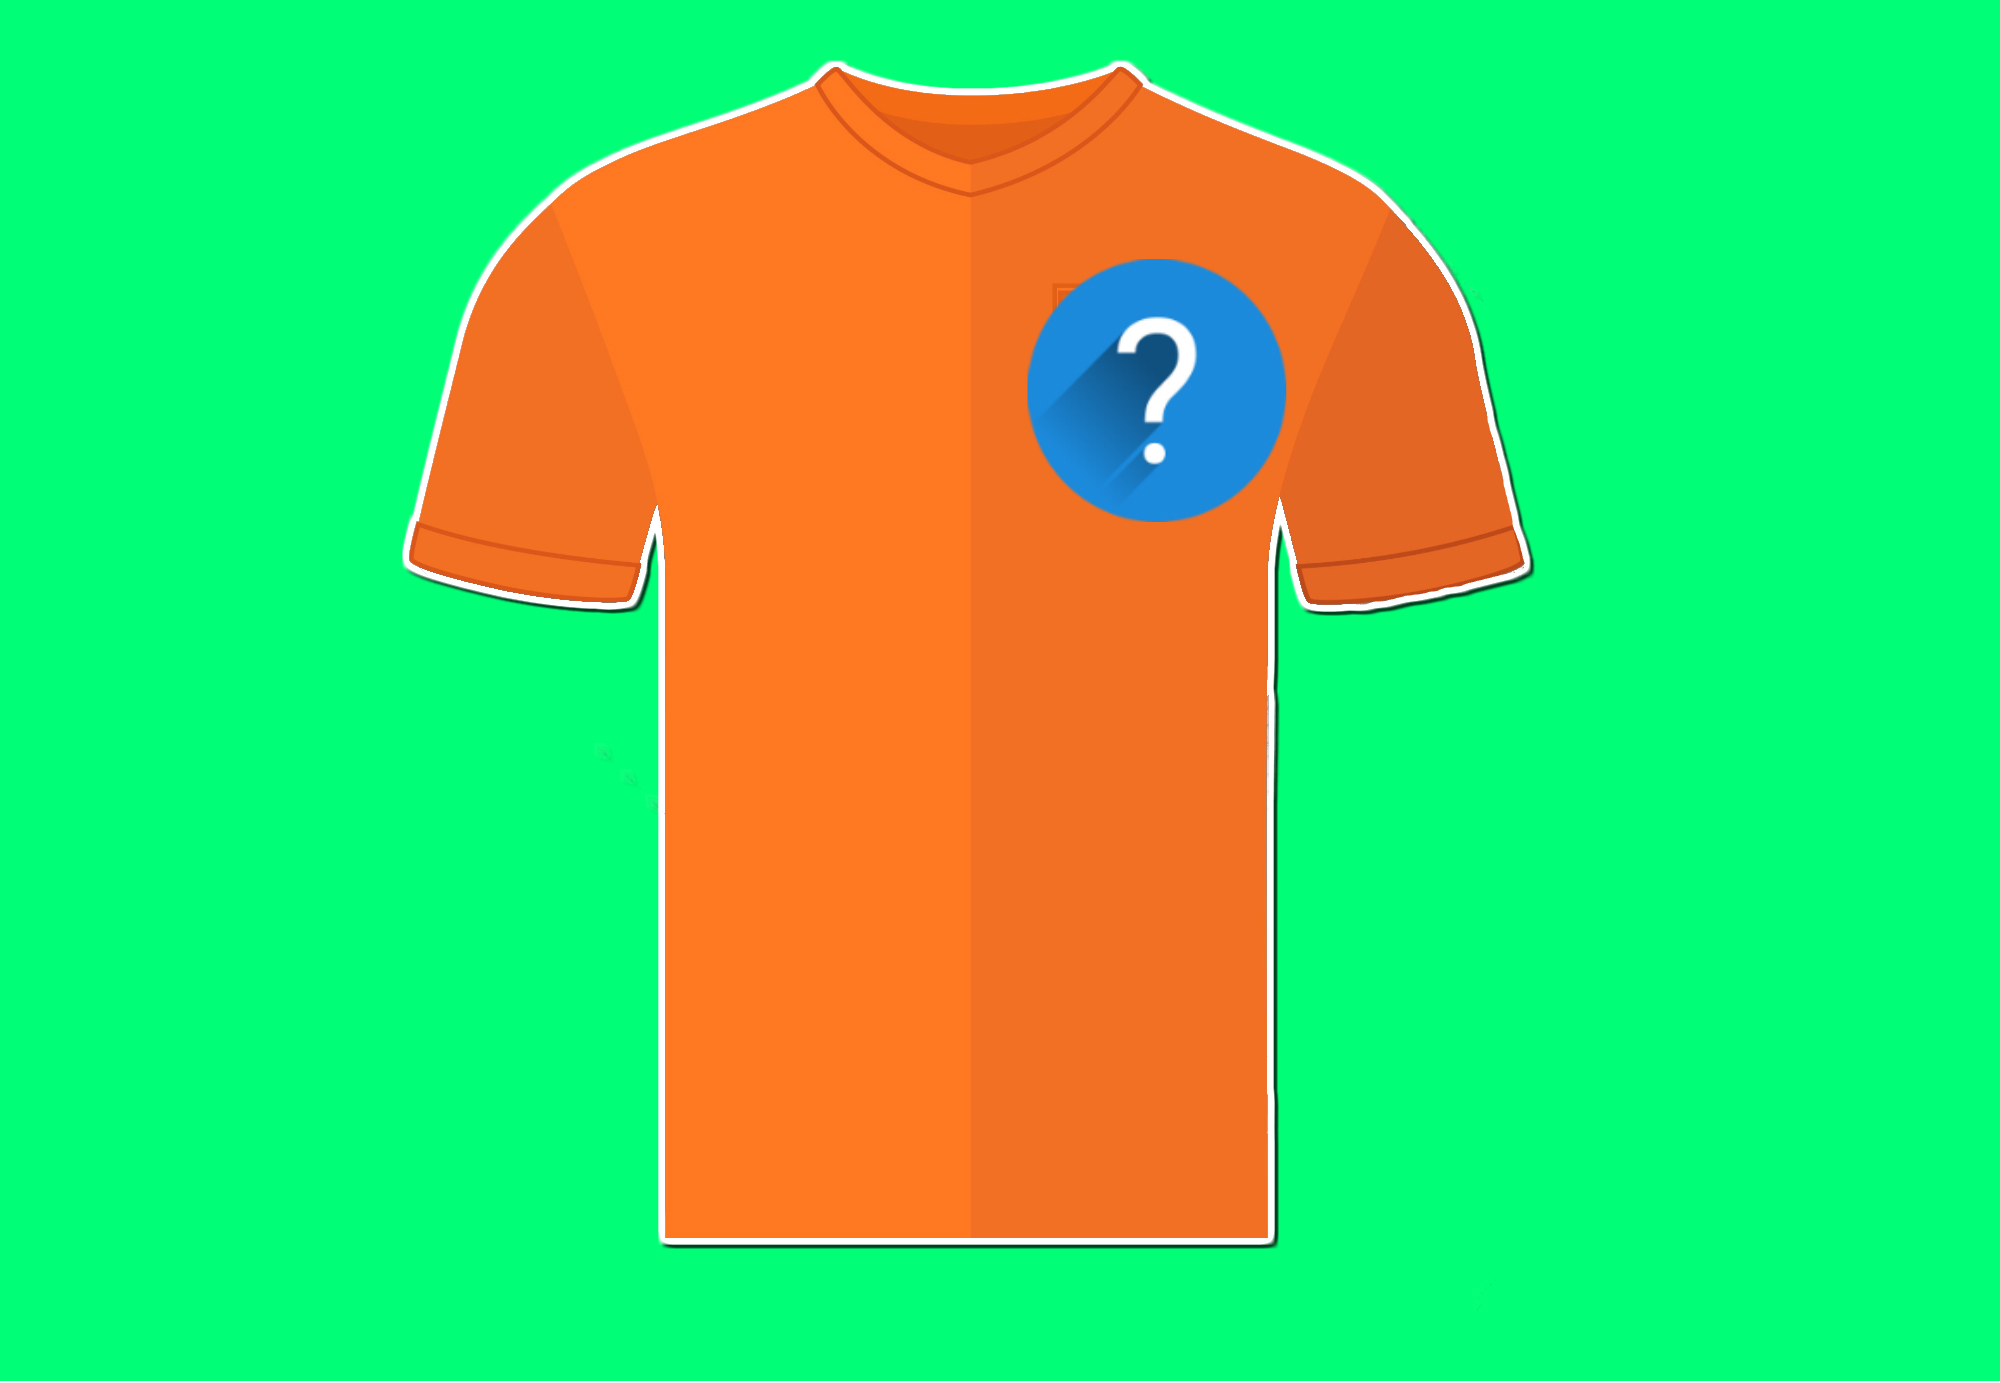 A bright orange football shirt